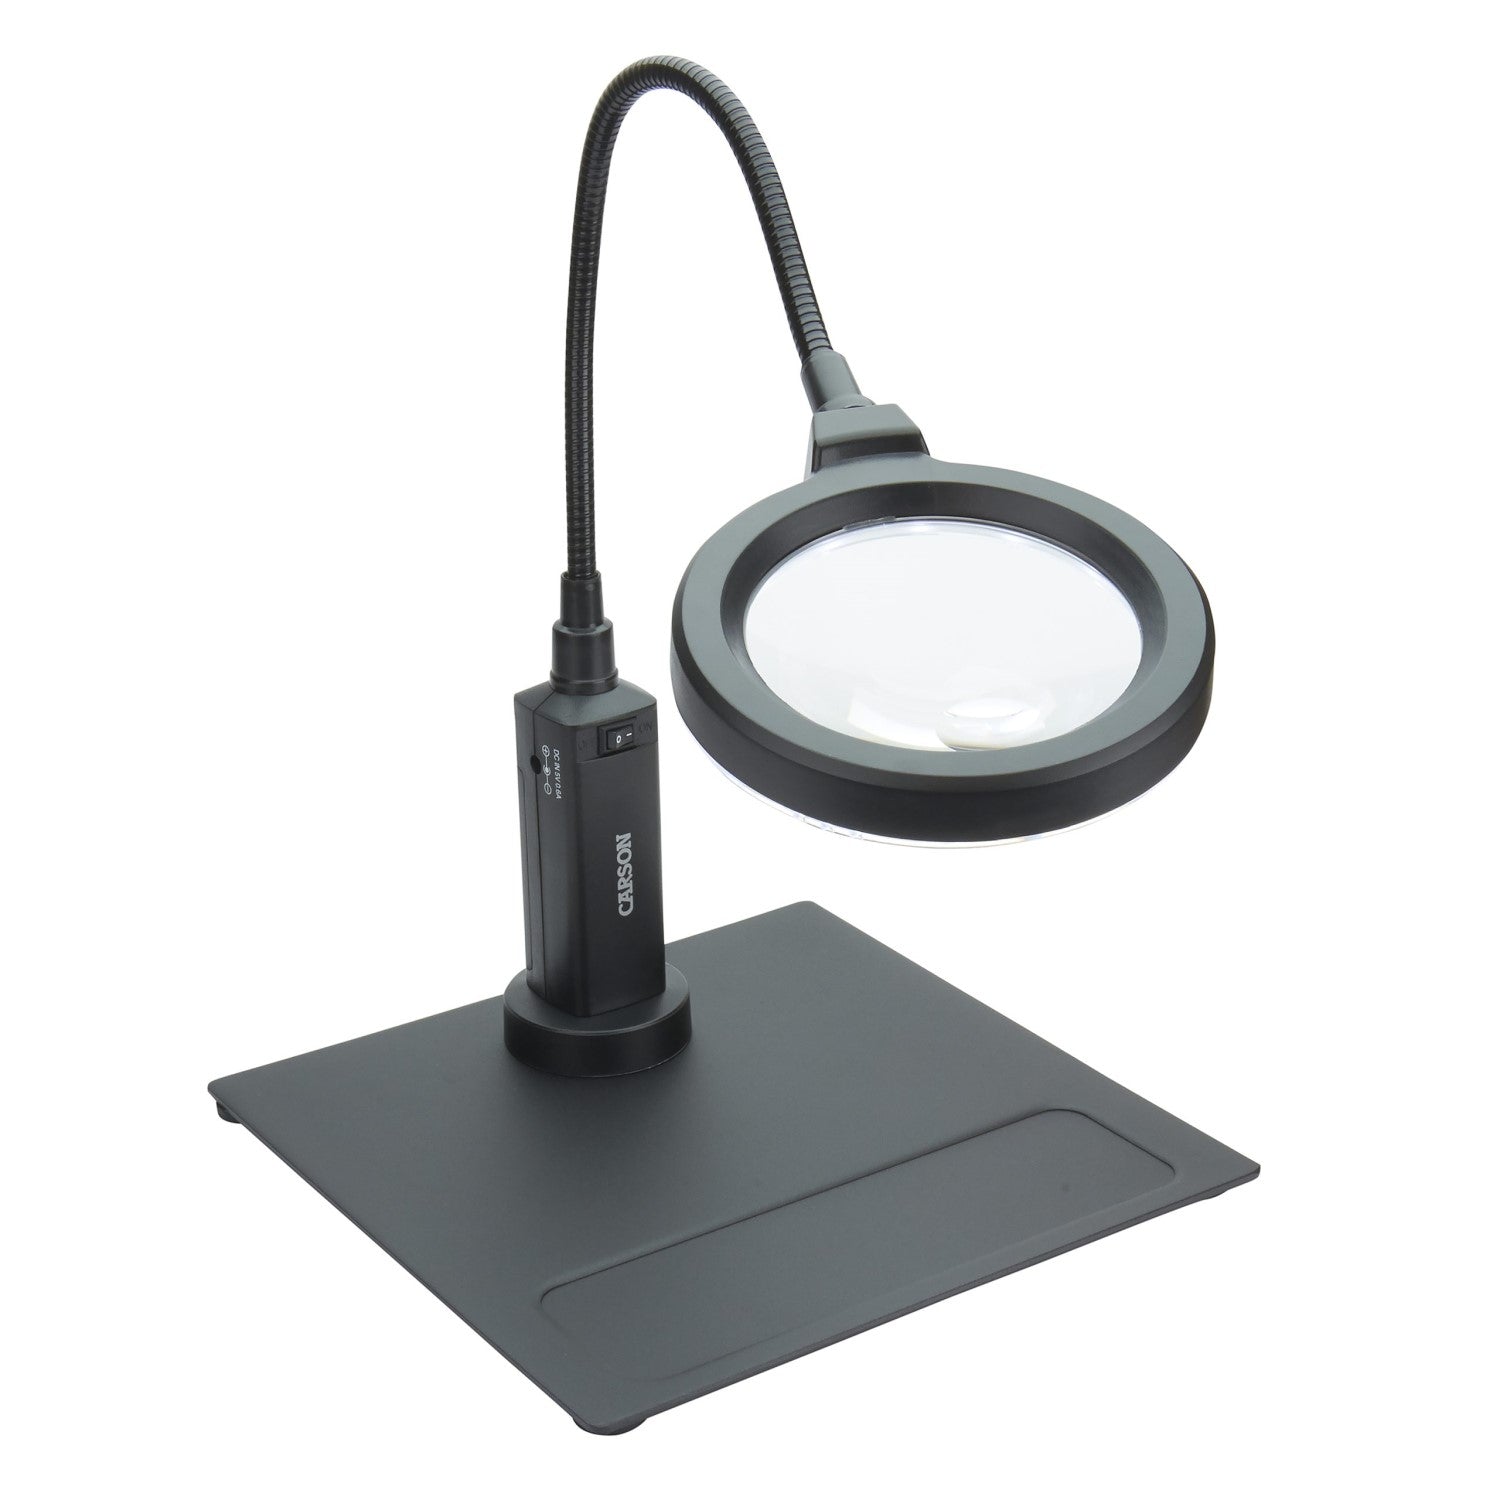 Image of Magniflex LED Magnifier with Base.